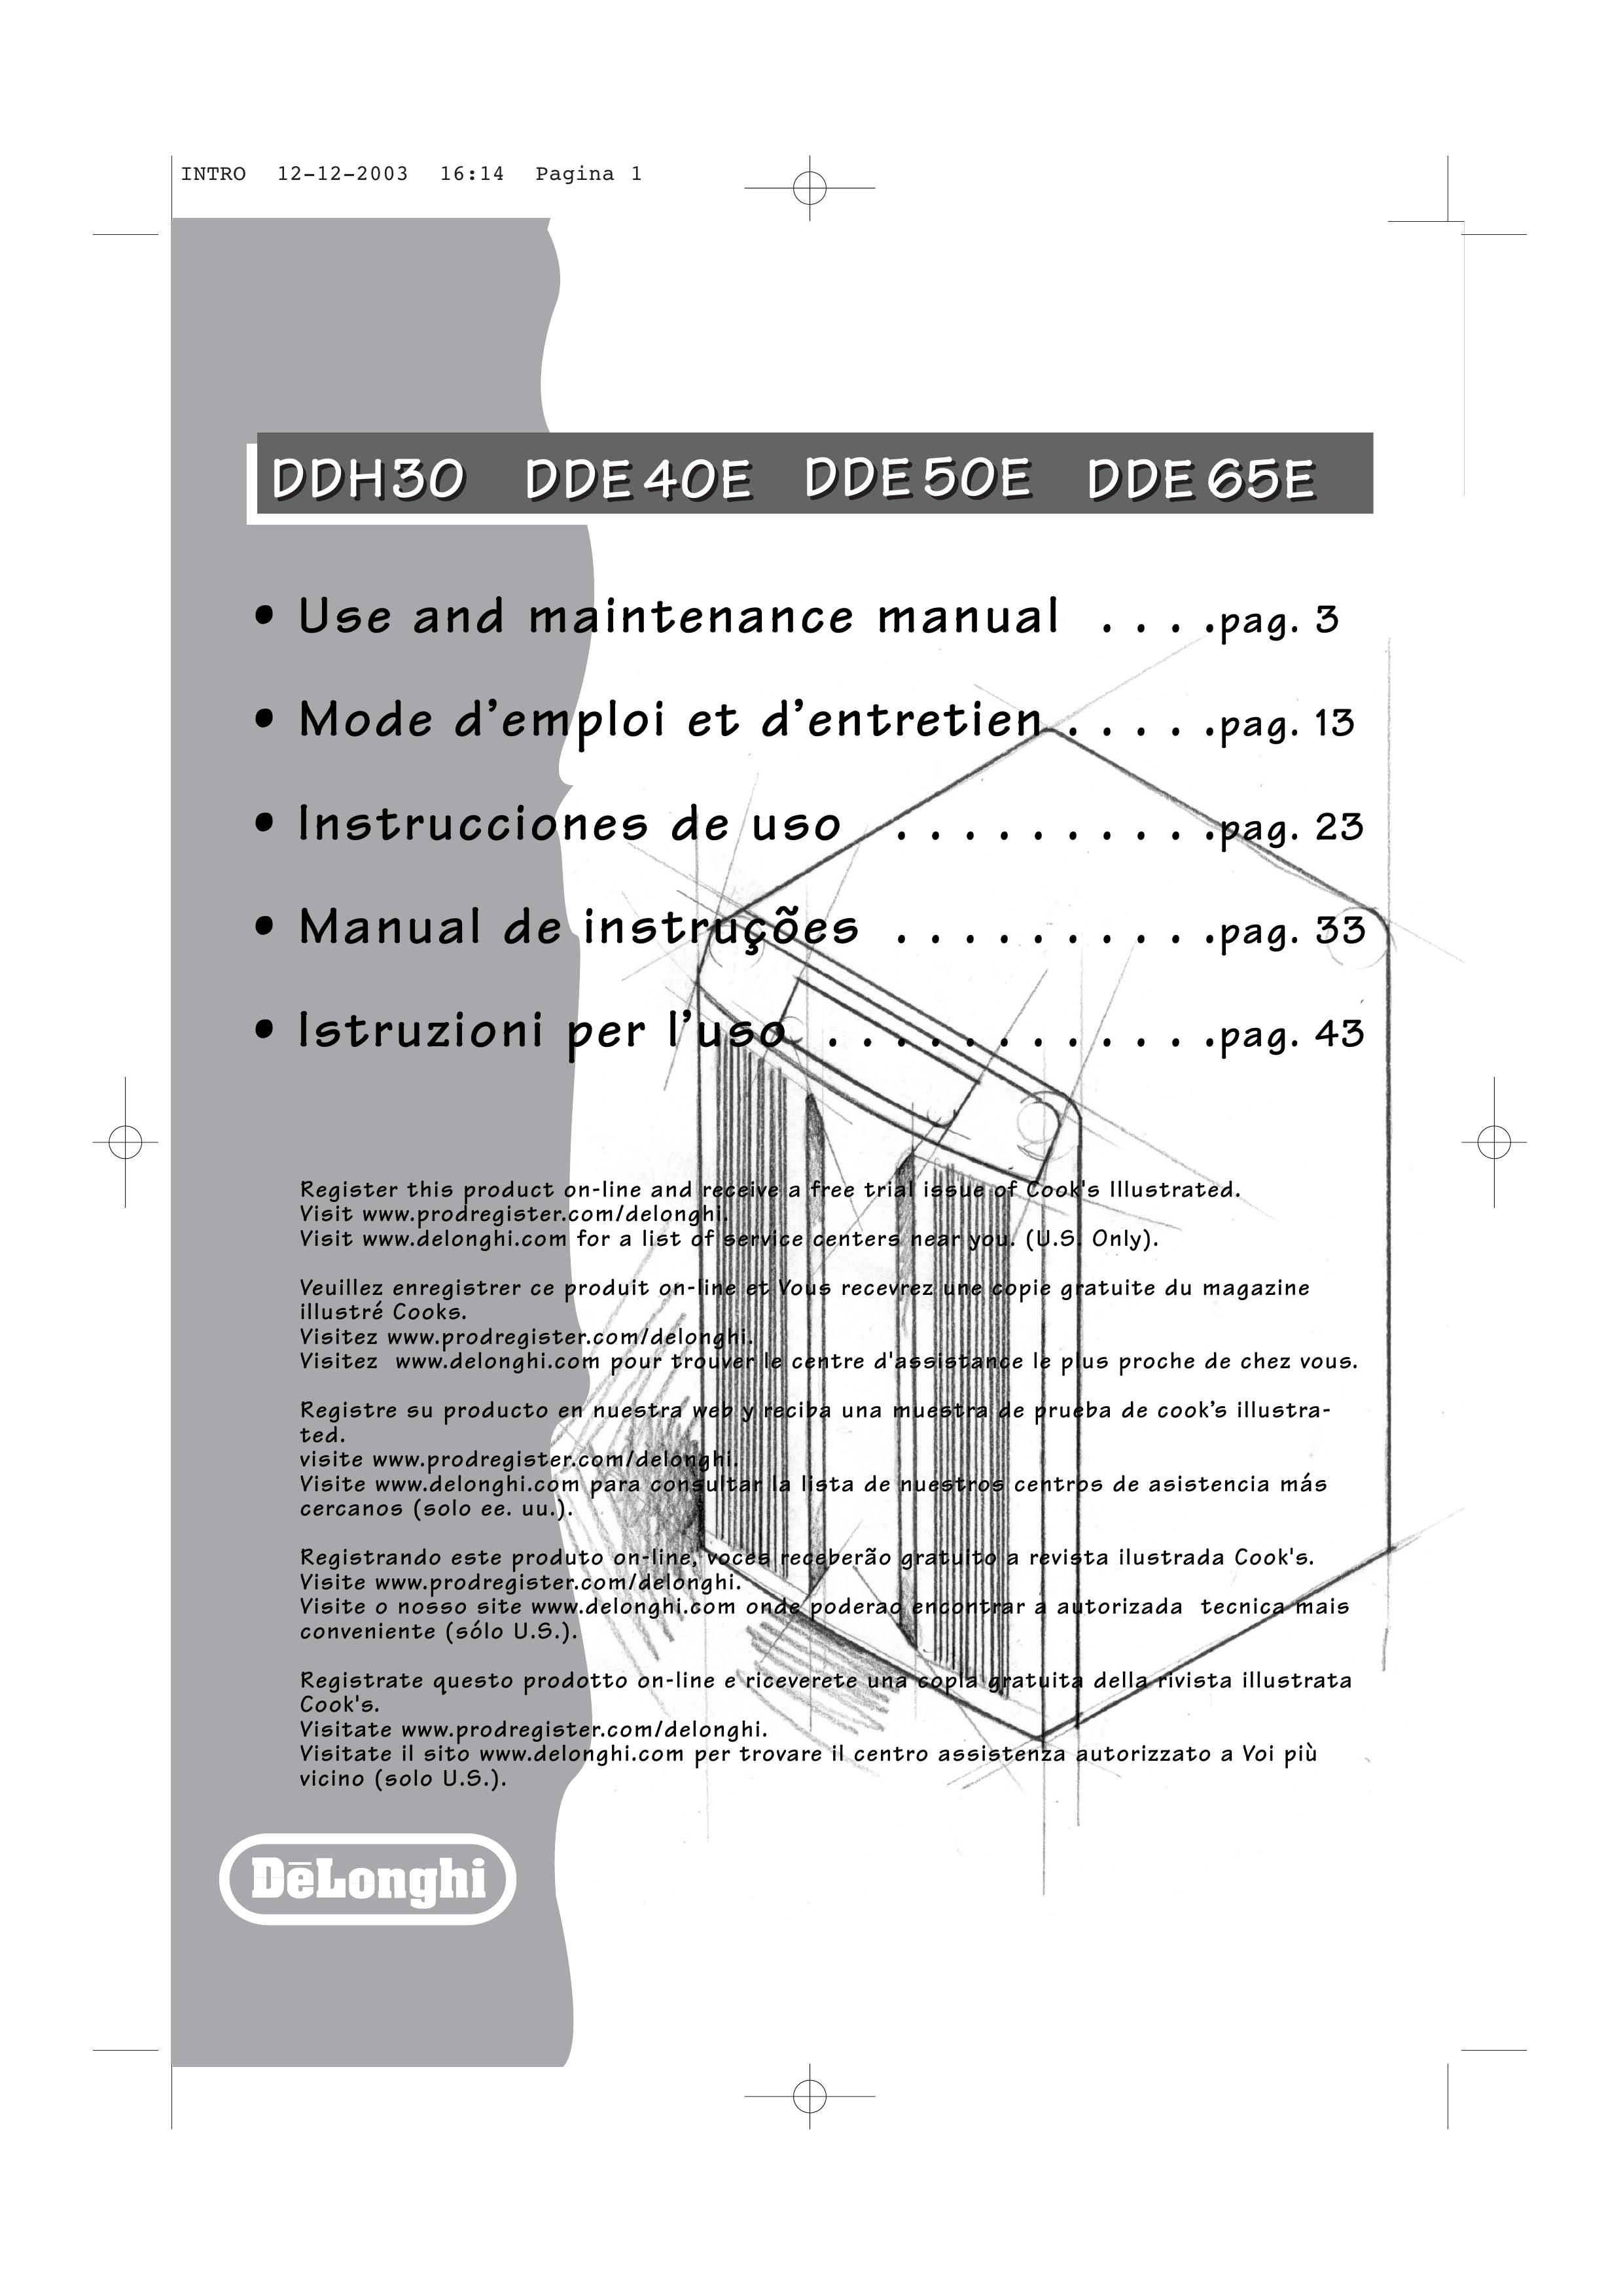 DeLonghi DDE 50E Washer User Manual